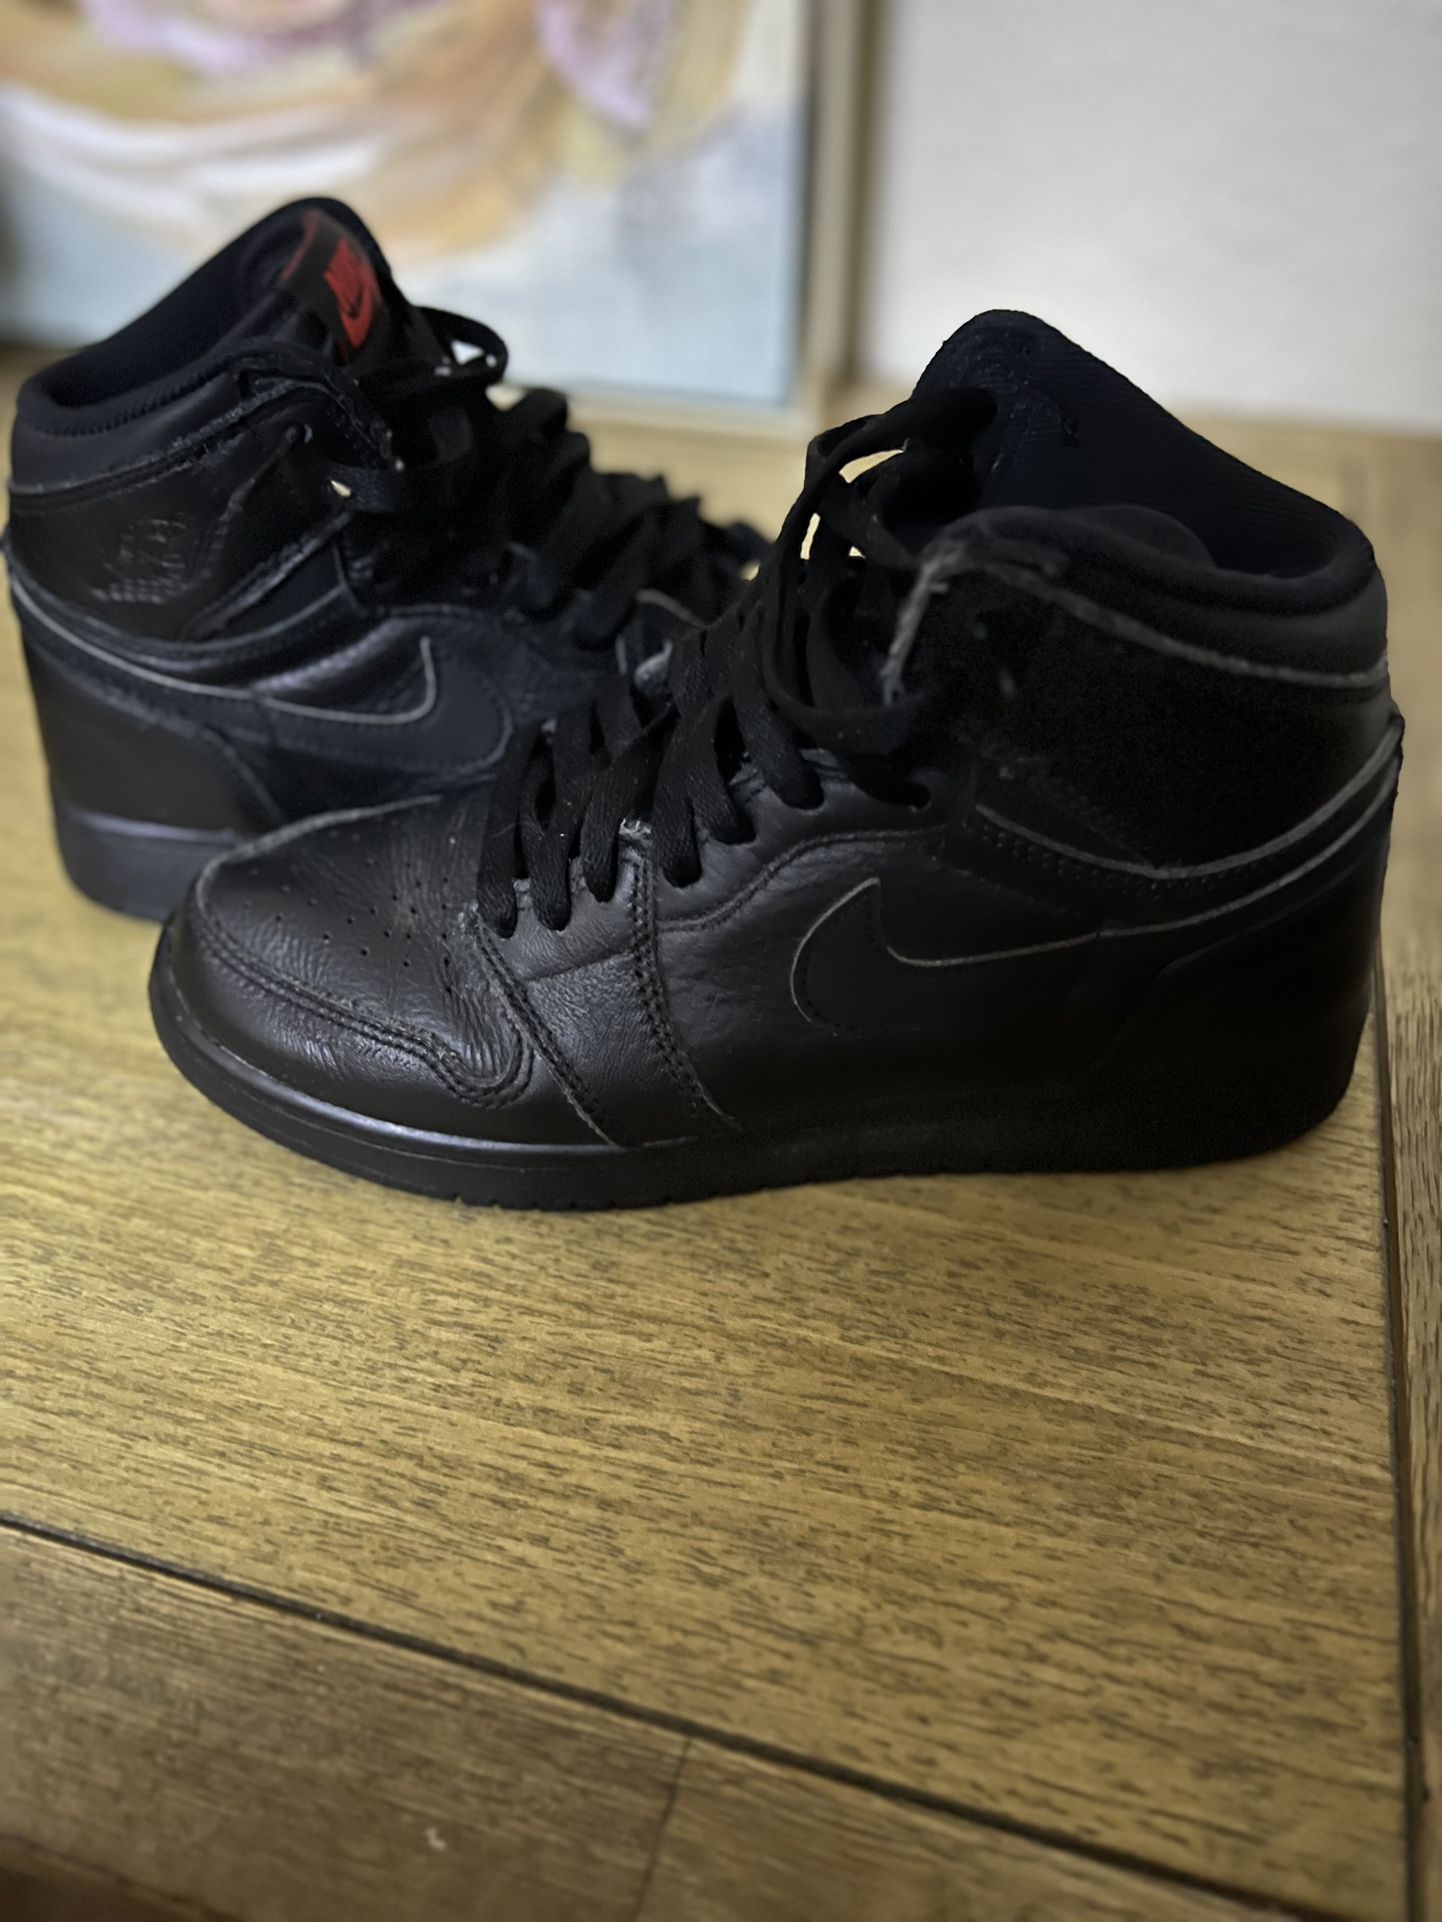 Black Air Jordan 